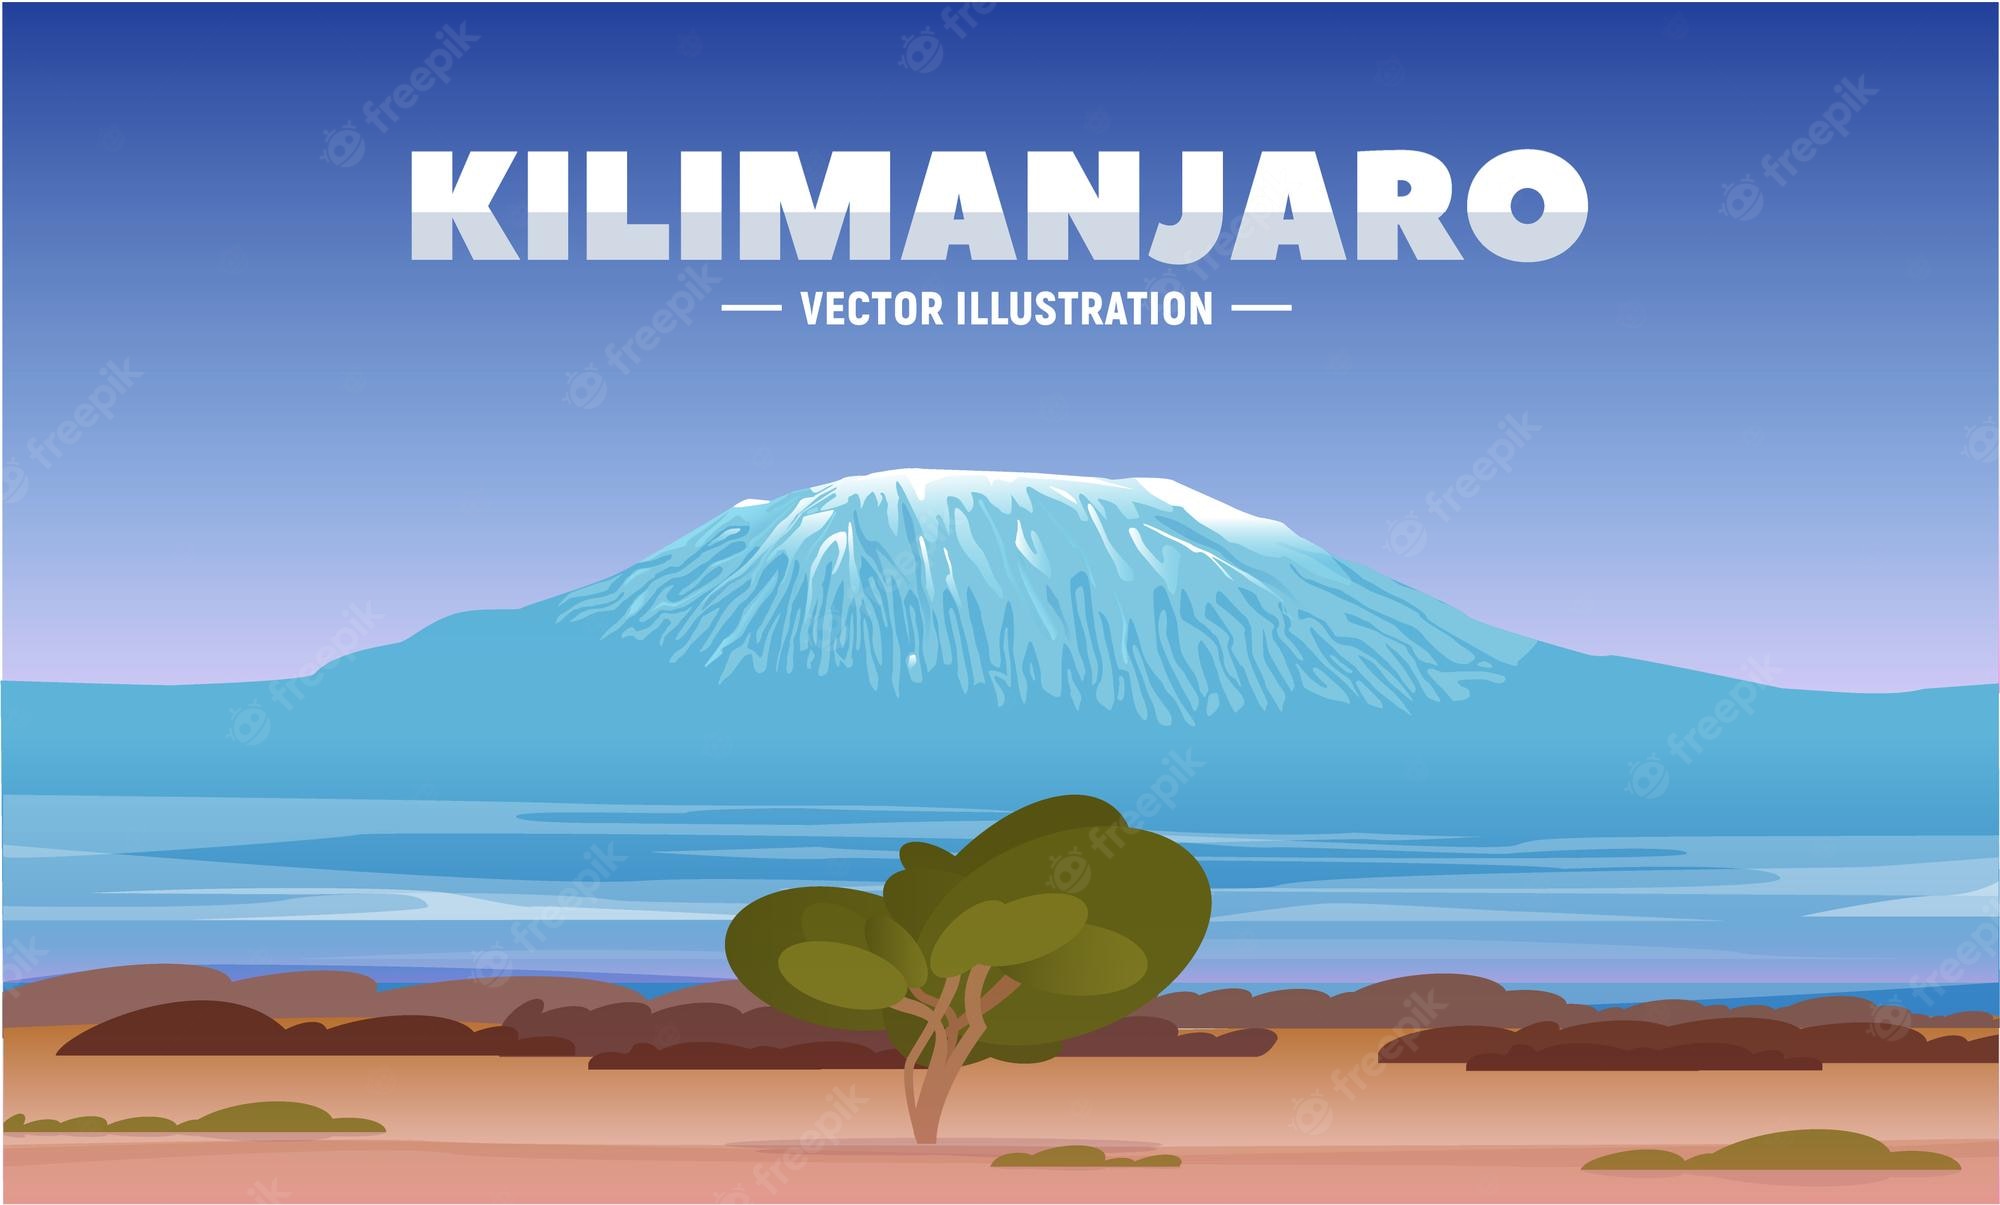 mount-kilimanjaro-african-savanna-background-amboseli-national-park-kenya-image-web-banner-print-design-vector-illustration_596401-536